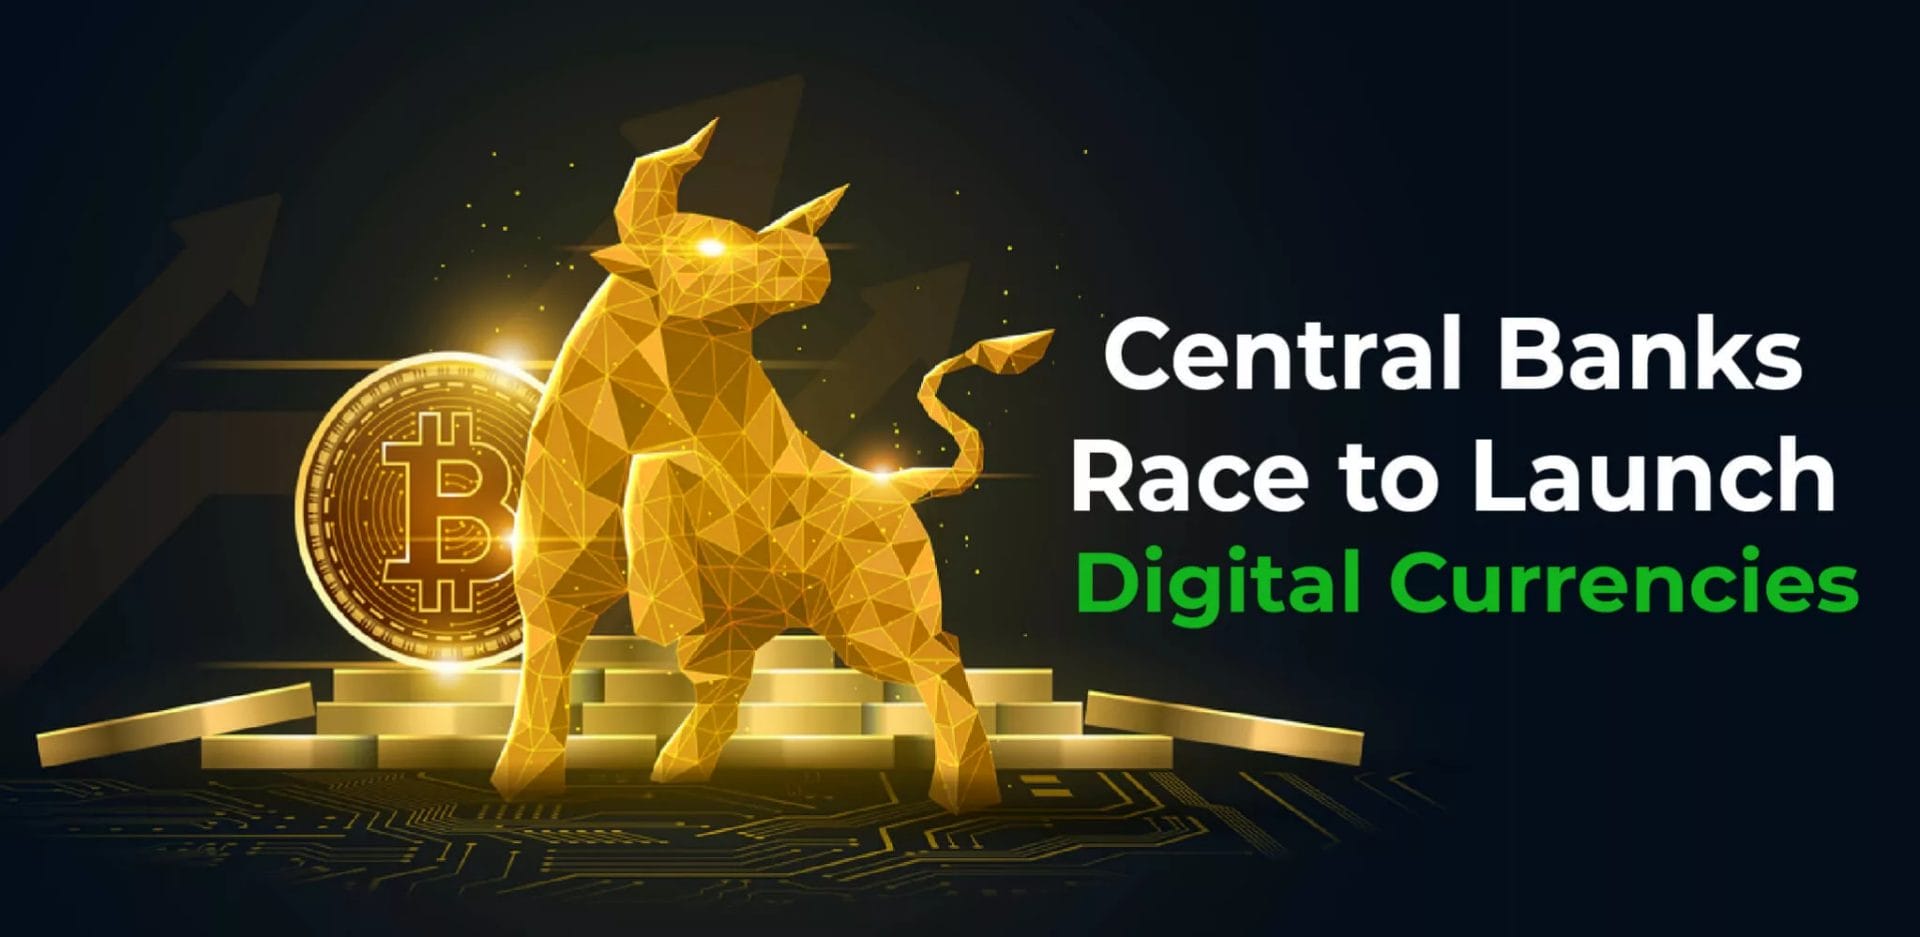 Digital currency race